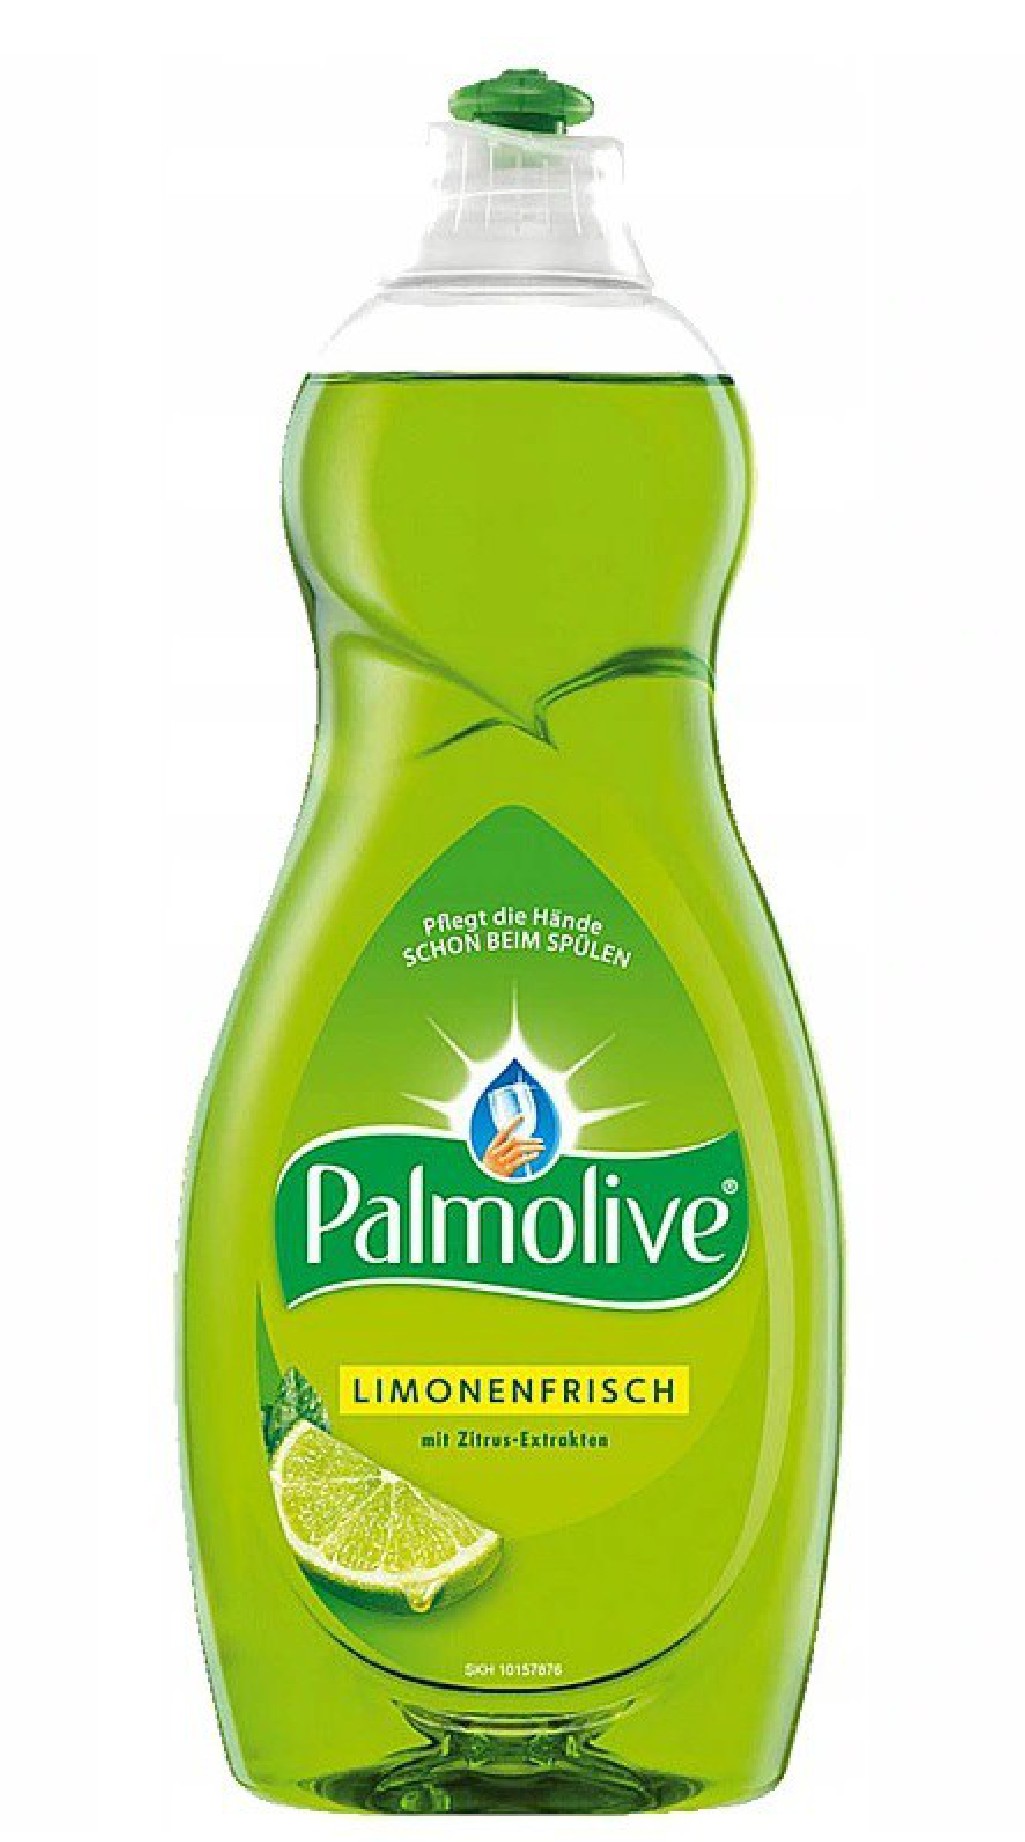 Palmolive Płyn do naczyń Limette 750 ml